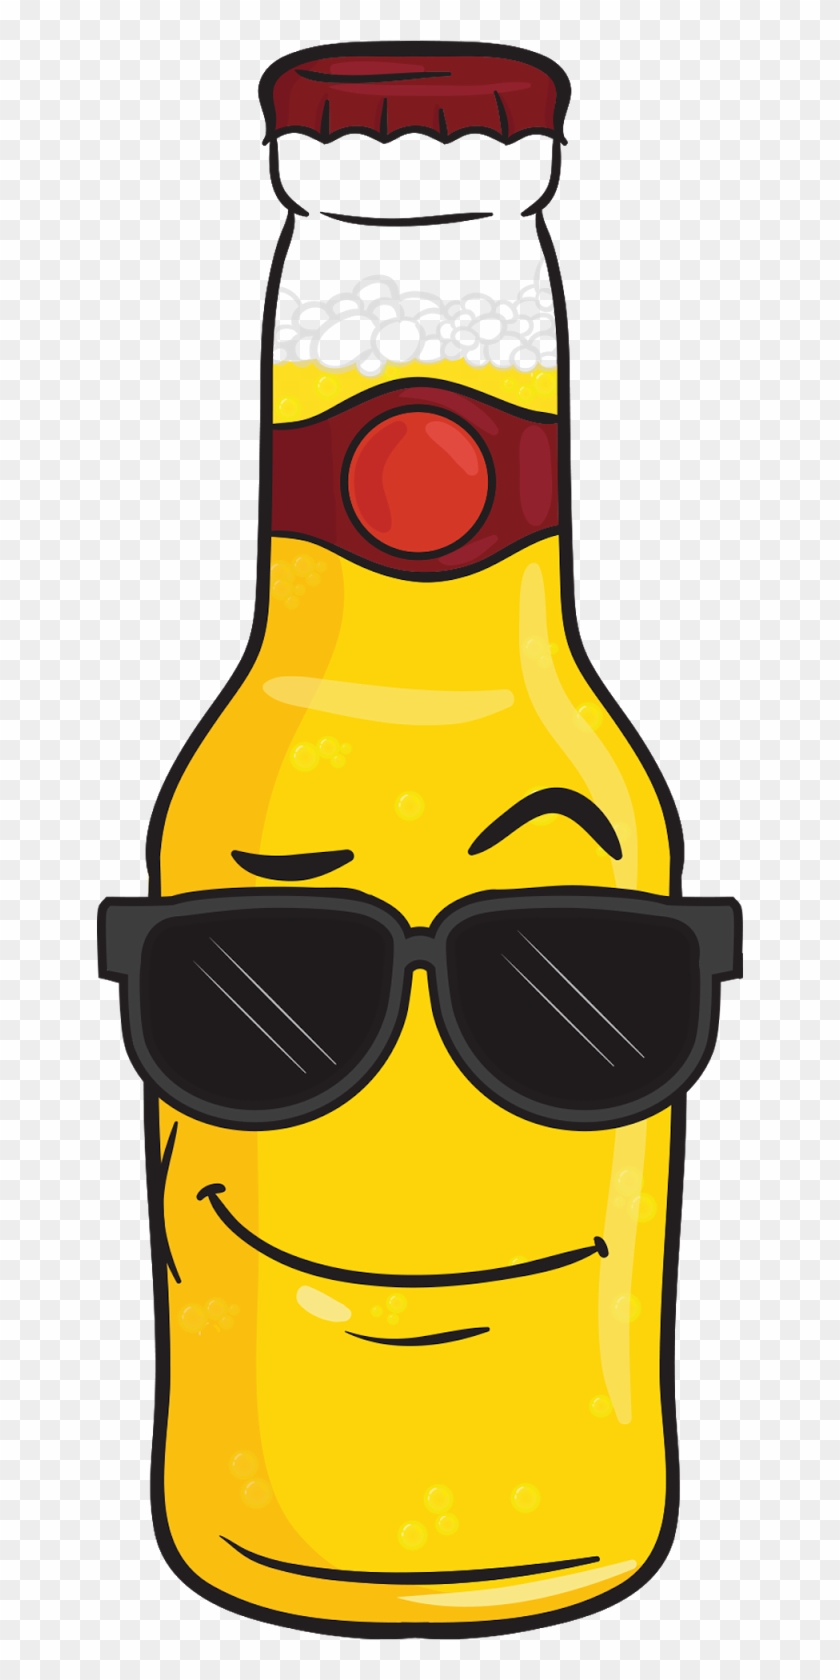 Upcoming Jacksonville Craft Beer Events - Beer Bottle Emoji #330866